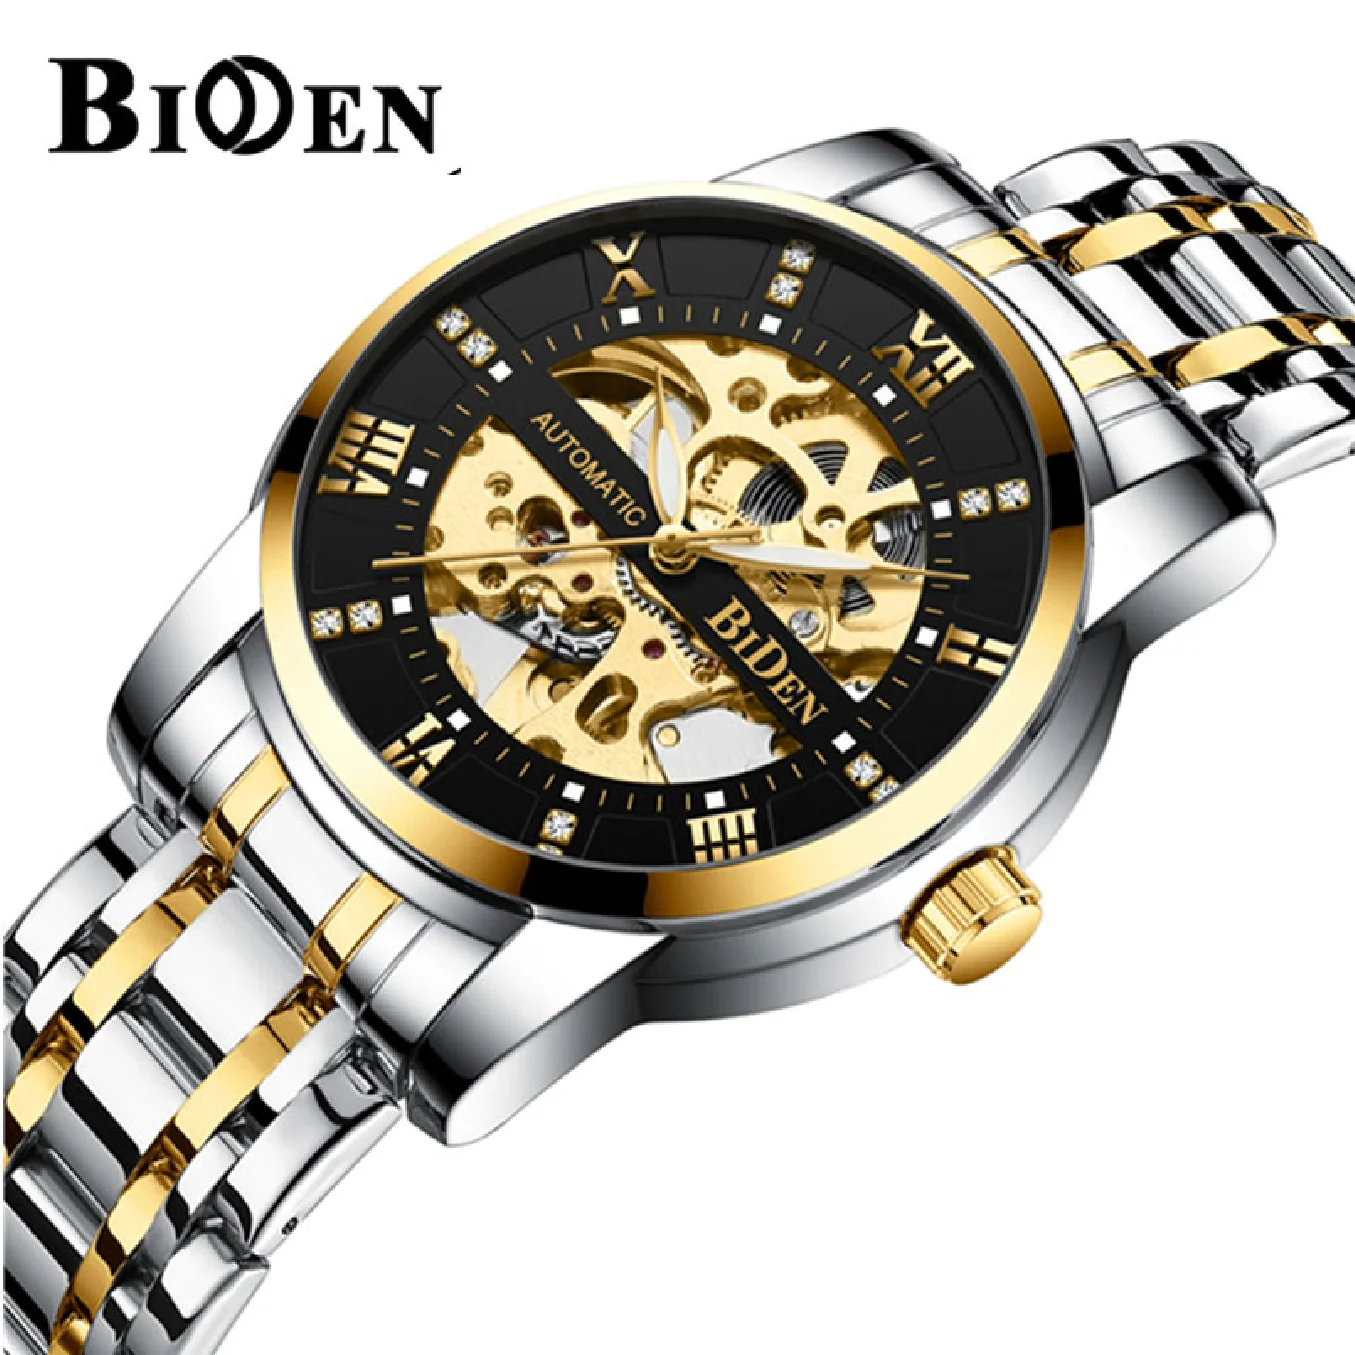 

BIDEN Brand Skeleton Watch New Sport Mechanical Watch Fashion Mens Watches Top Brand Montre Homme Clock Men Automatic Watch Gift